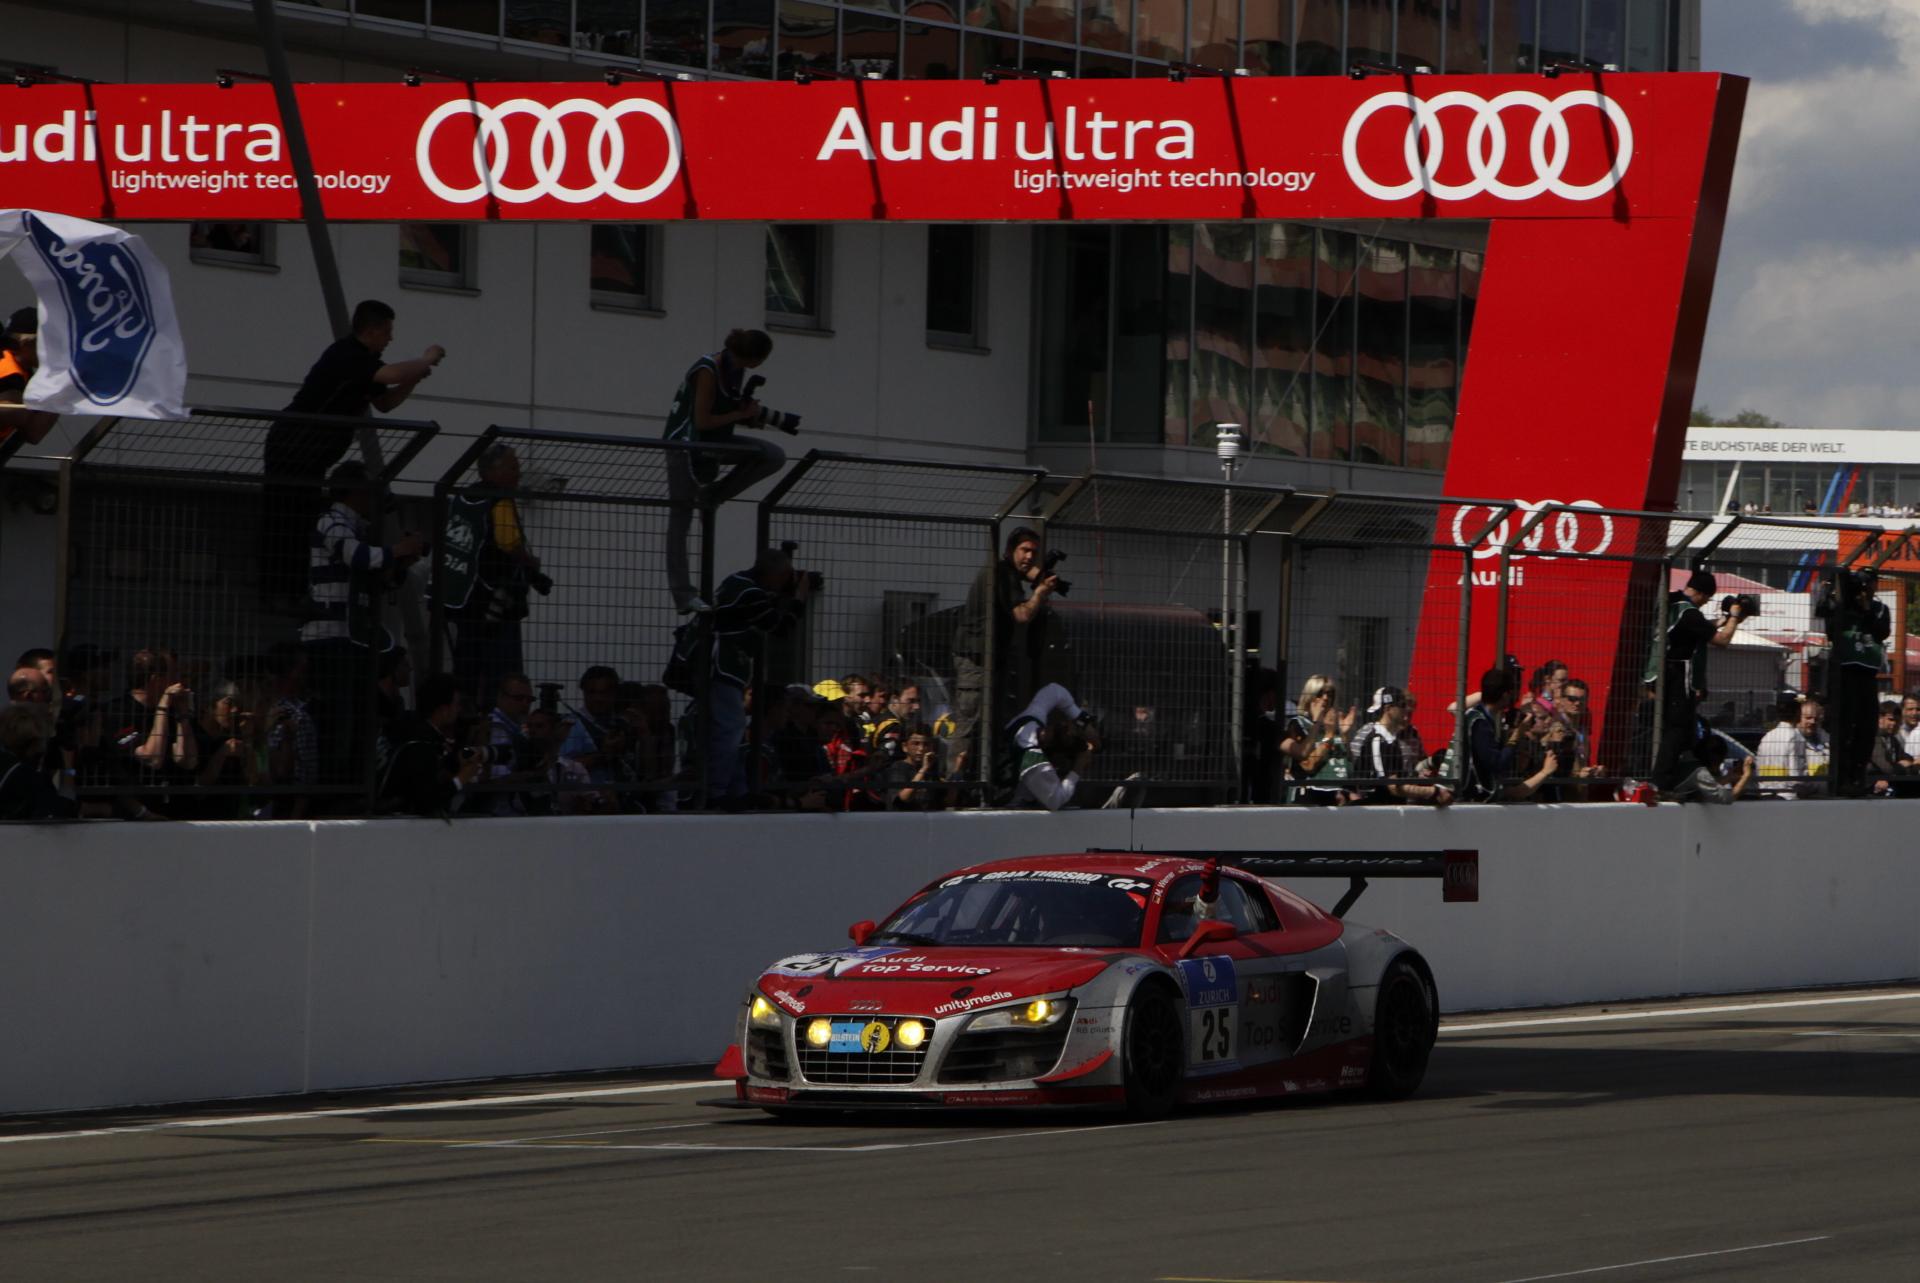 2012 Audi R8 LMS ultra